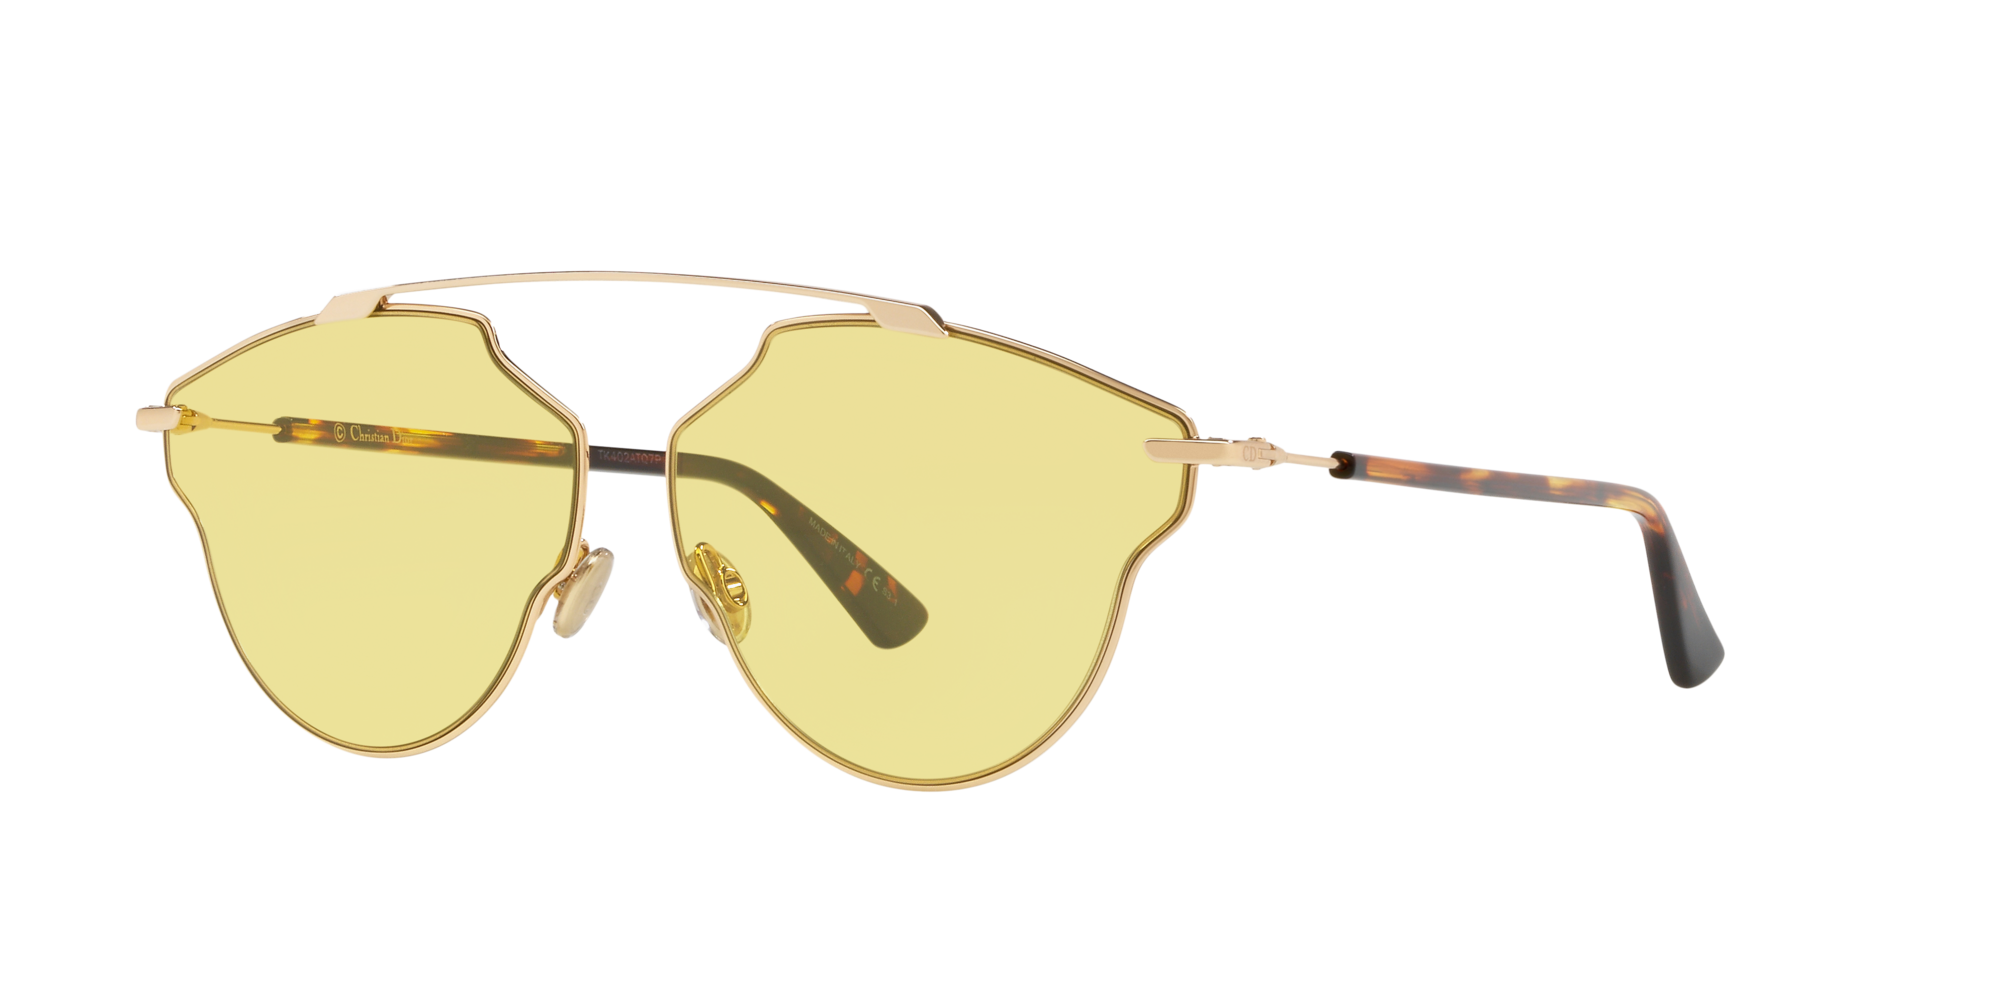 christian dior yellow sunglasses